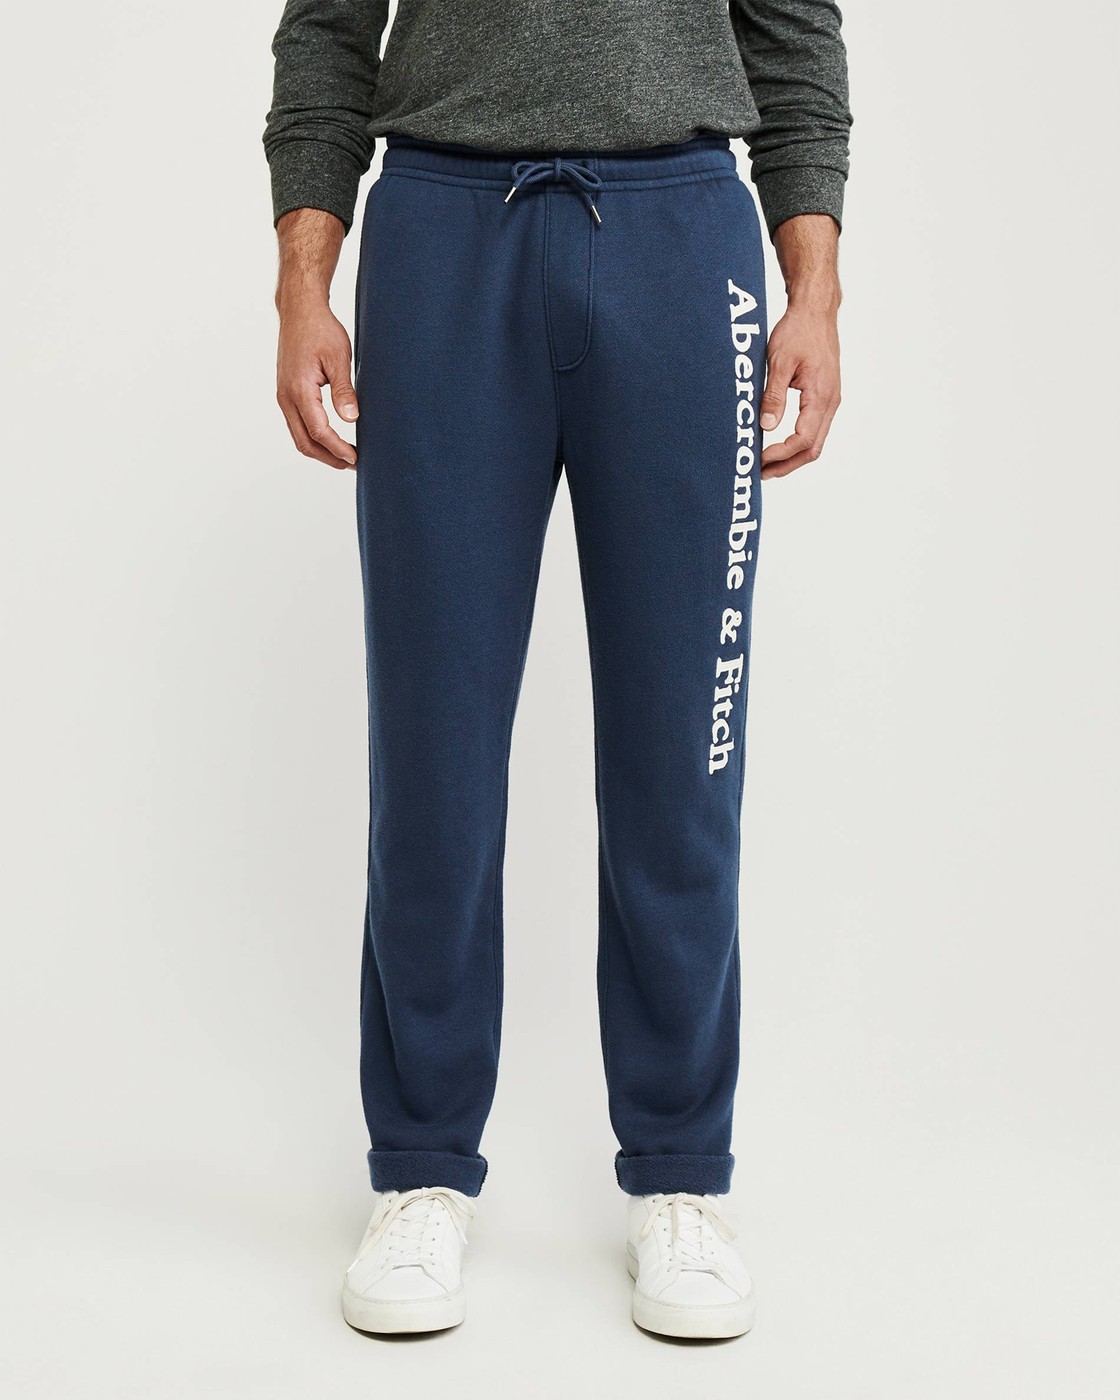 Спортивные штаны Abercrombie & Fitch, L, L